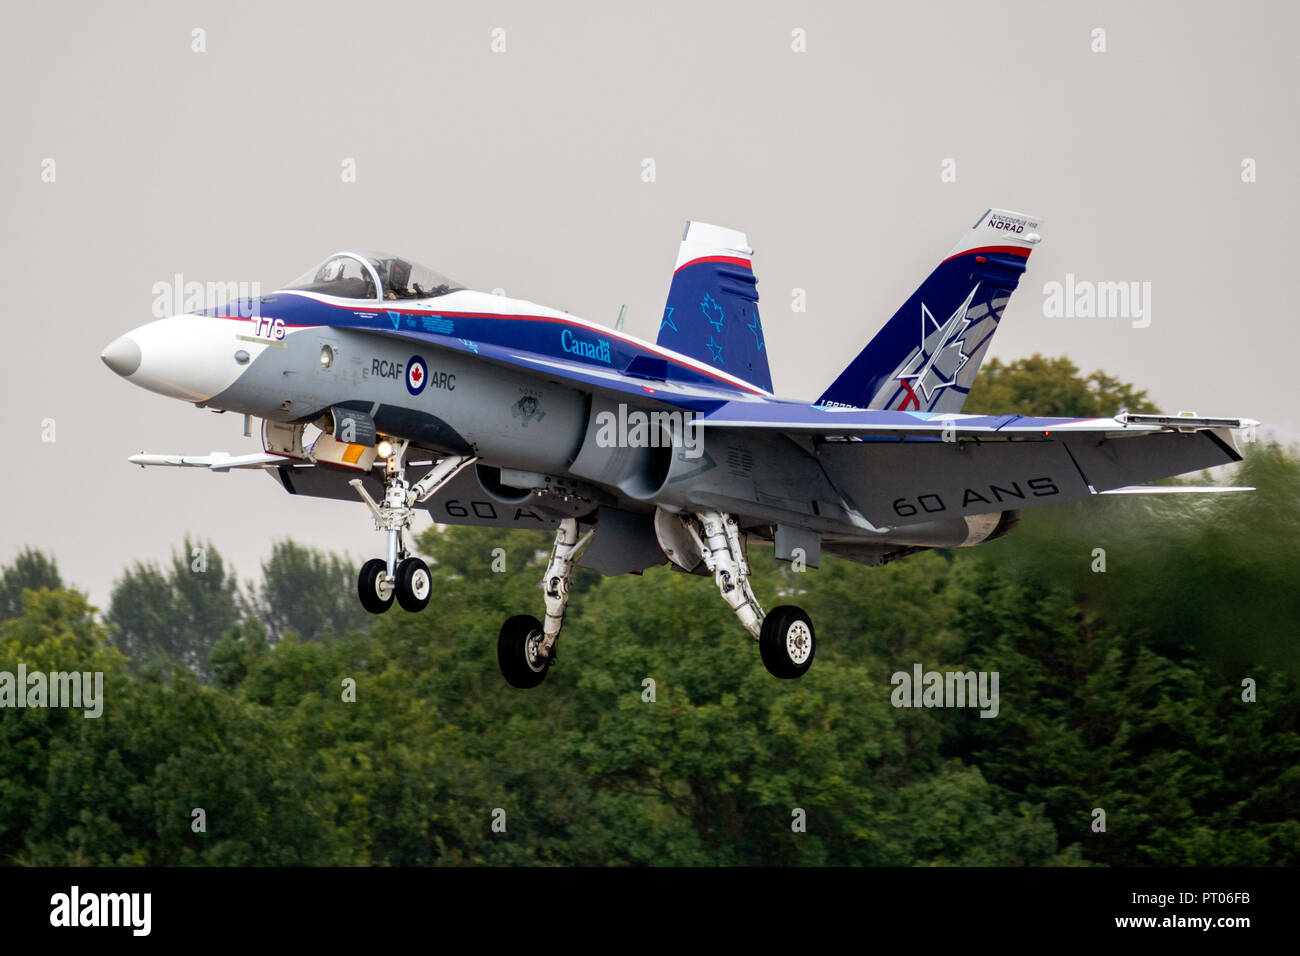 FAIRFORD, UK - JUL 13, 2018: Canadian Air Force F-18 Hornet fighter jet landing on RAF Fairford airbase. Stock Photo